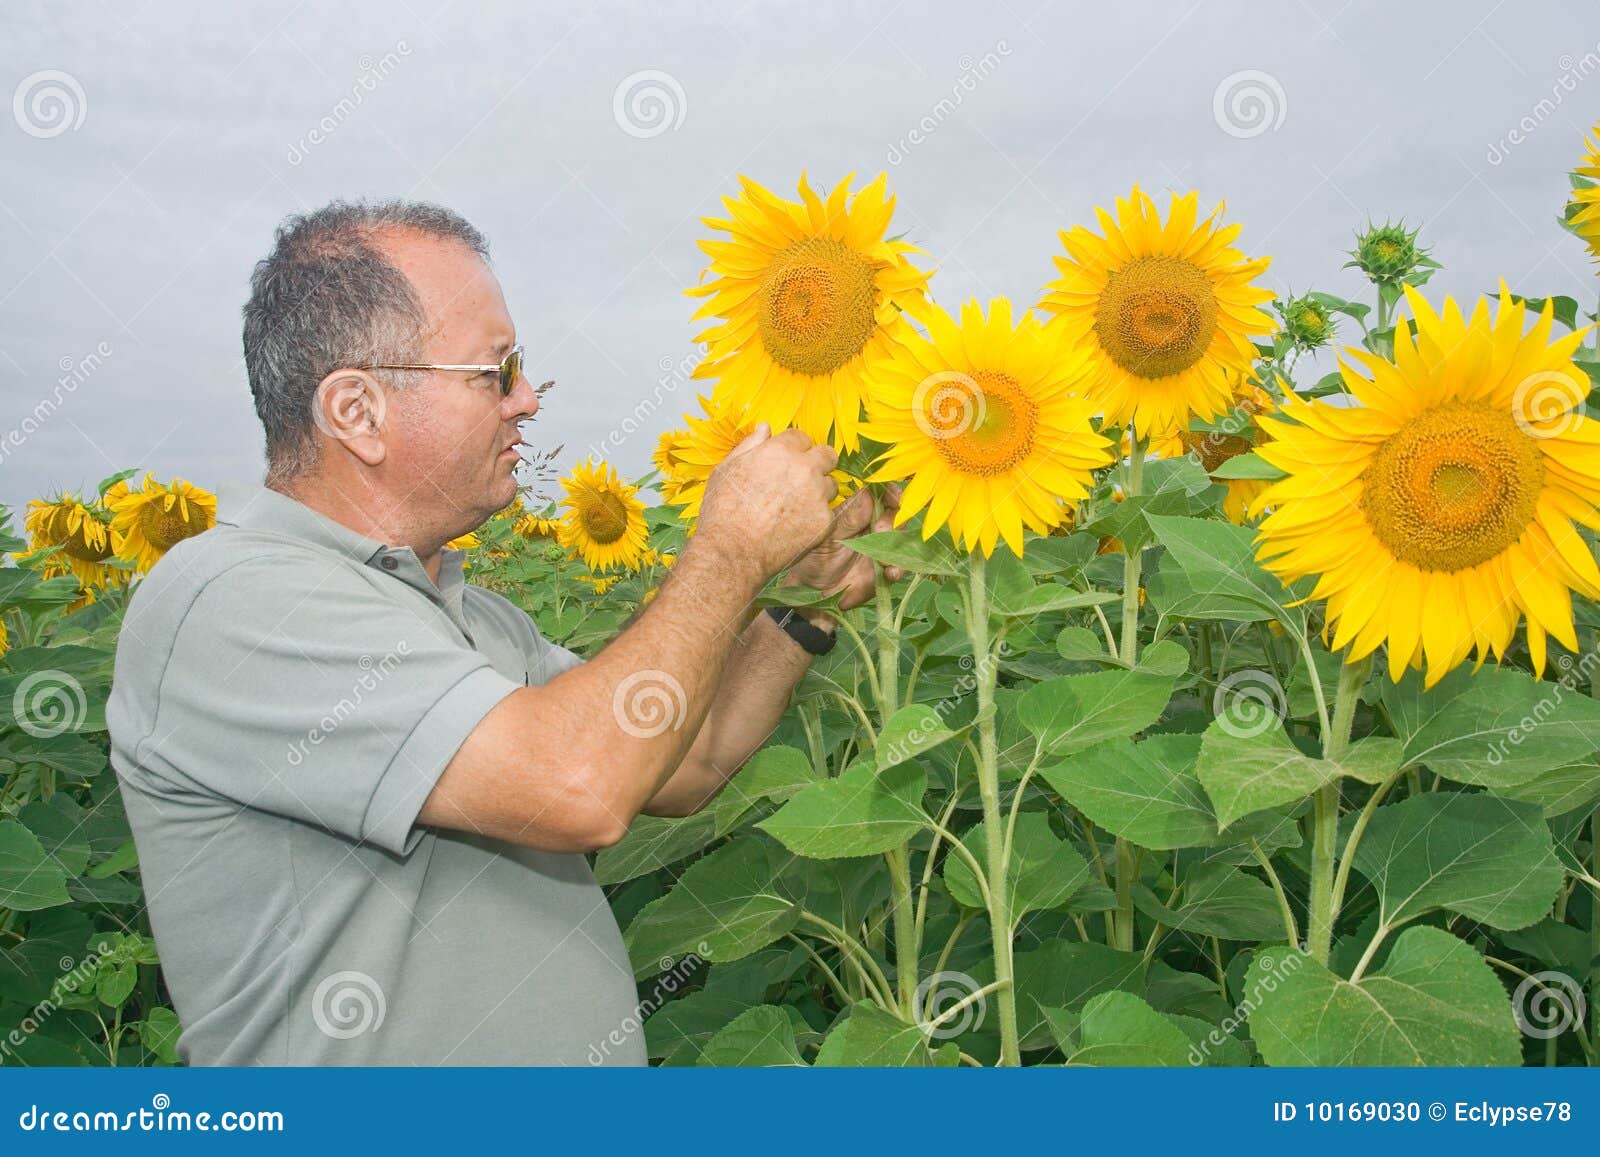 farmer on a sunflower field